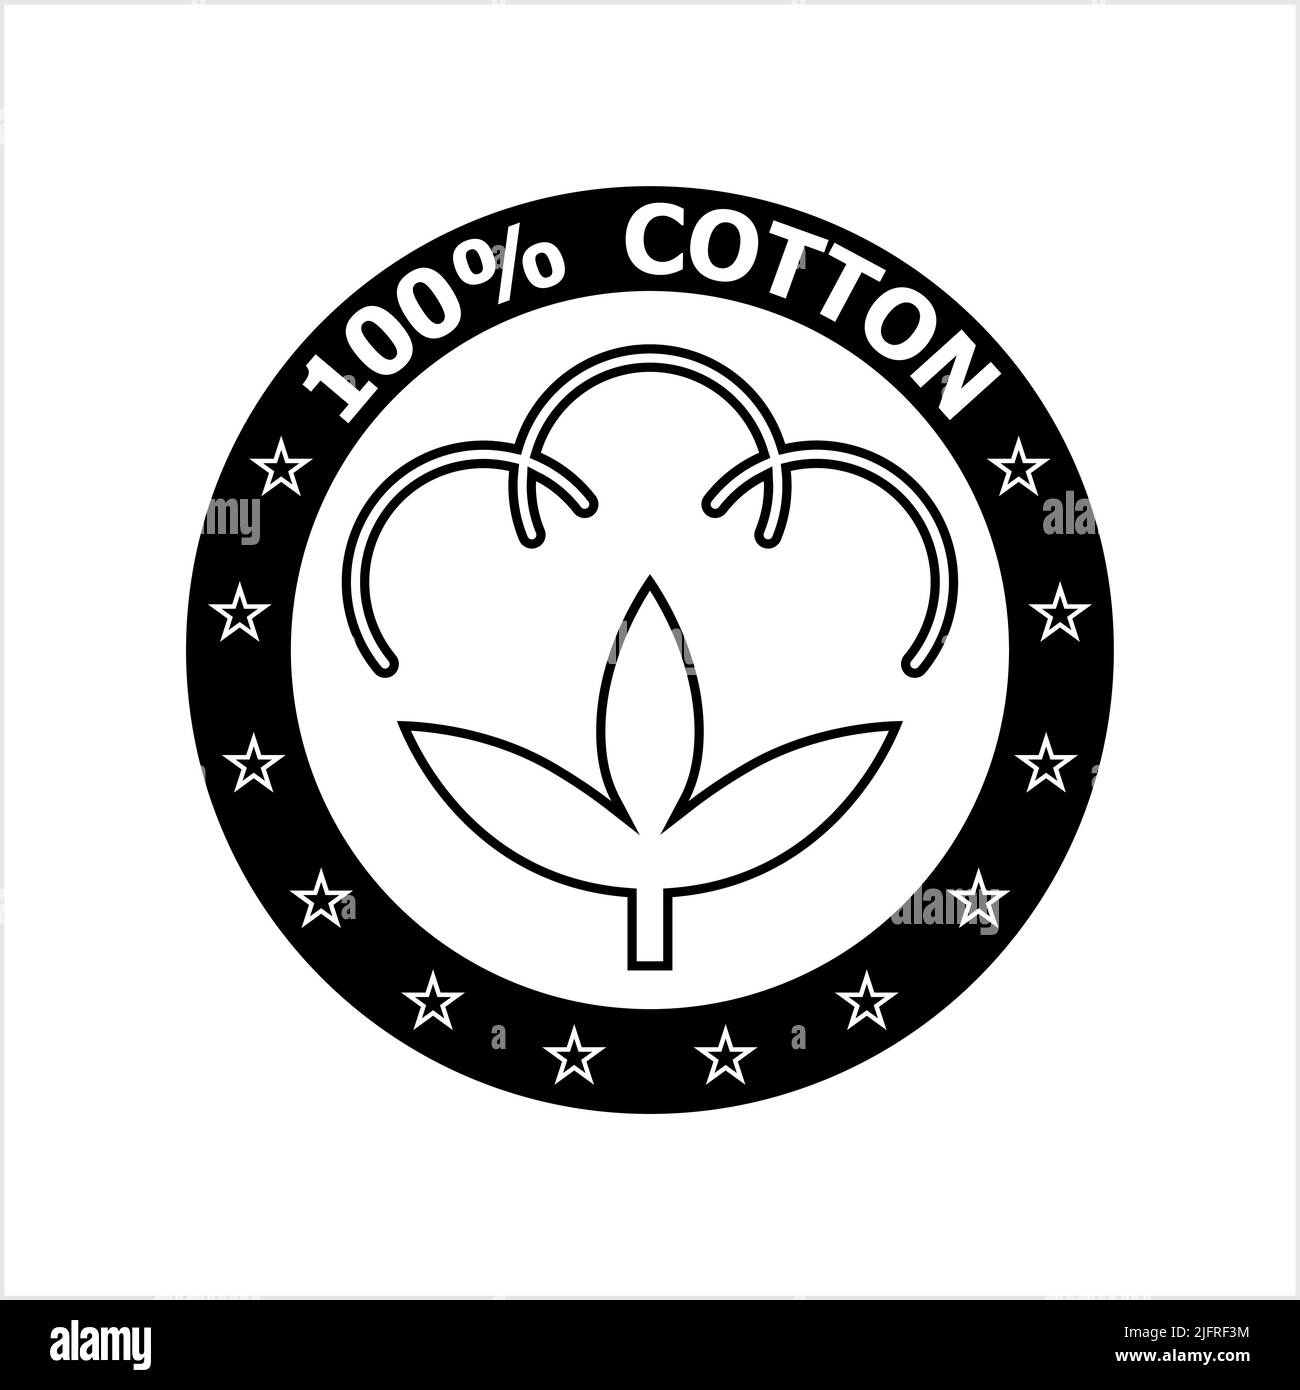 One Hundred Percent Cotton Icon, 100% Cotton Icon, Cotton Flower Icon ...